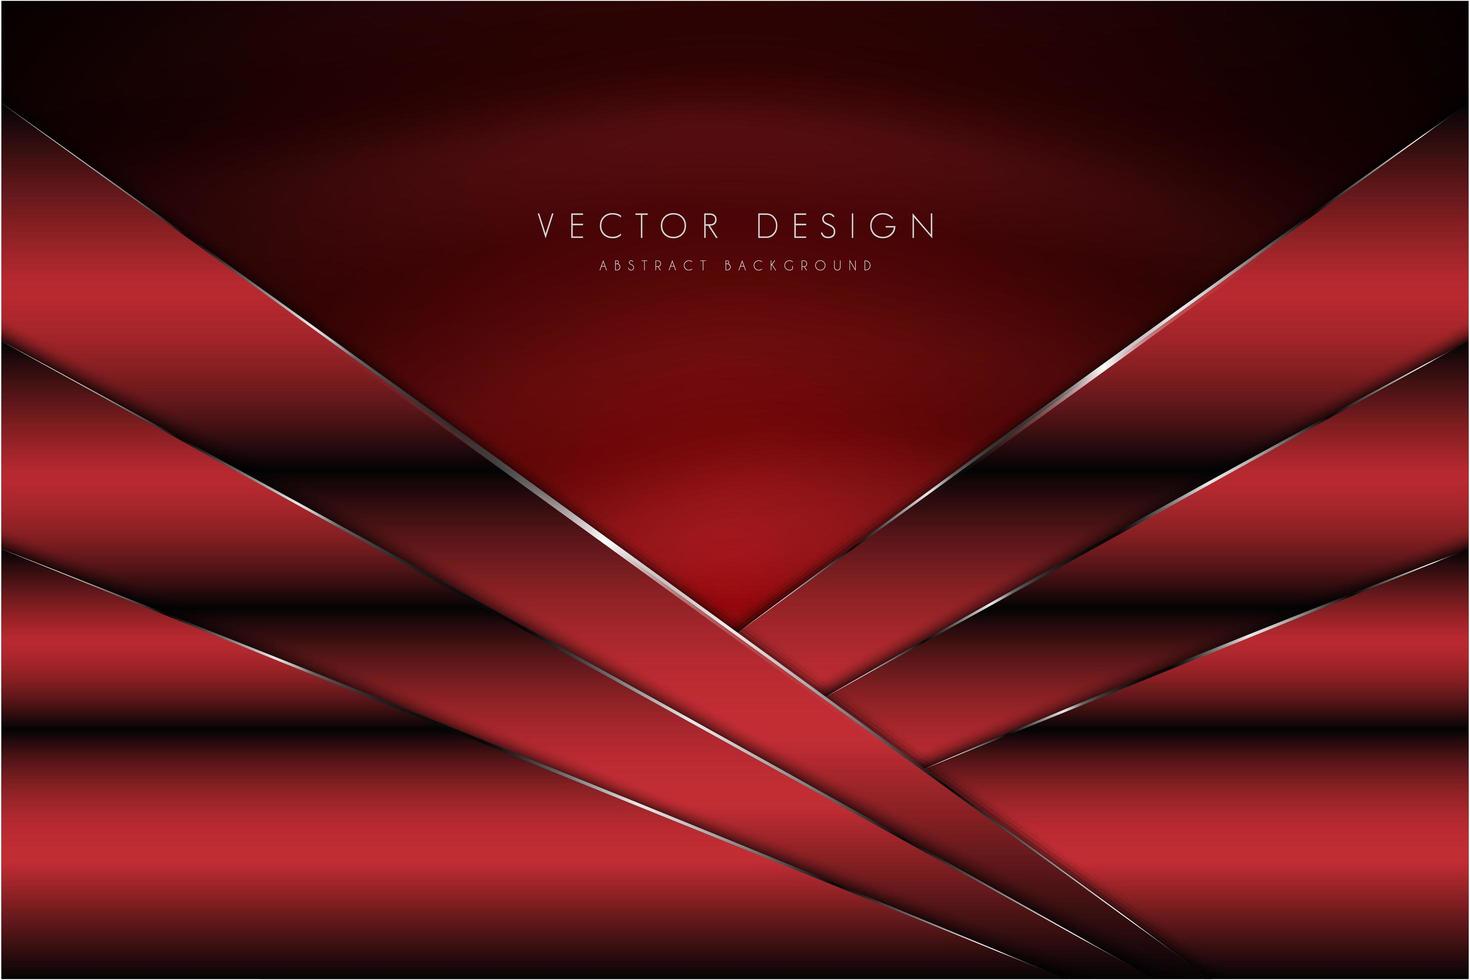 röd metallisk bakgrund med sidenstruktur vektor